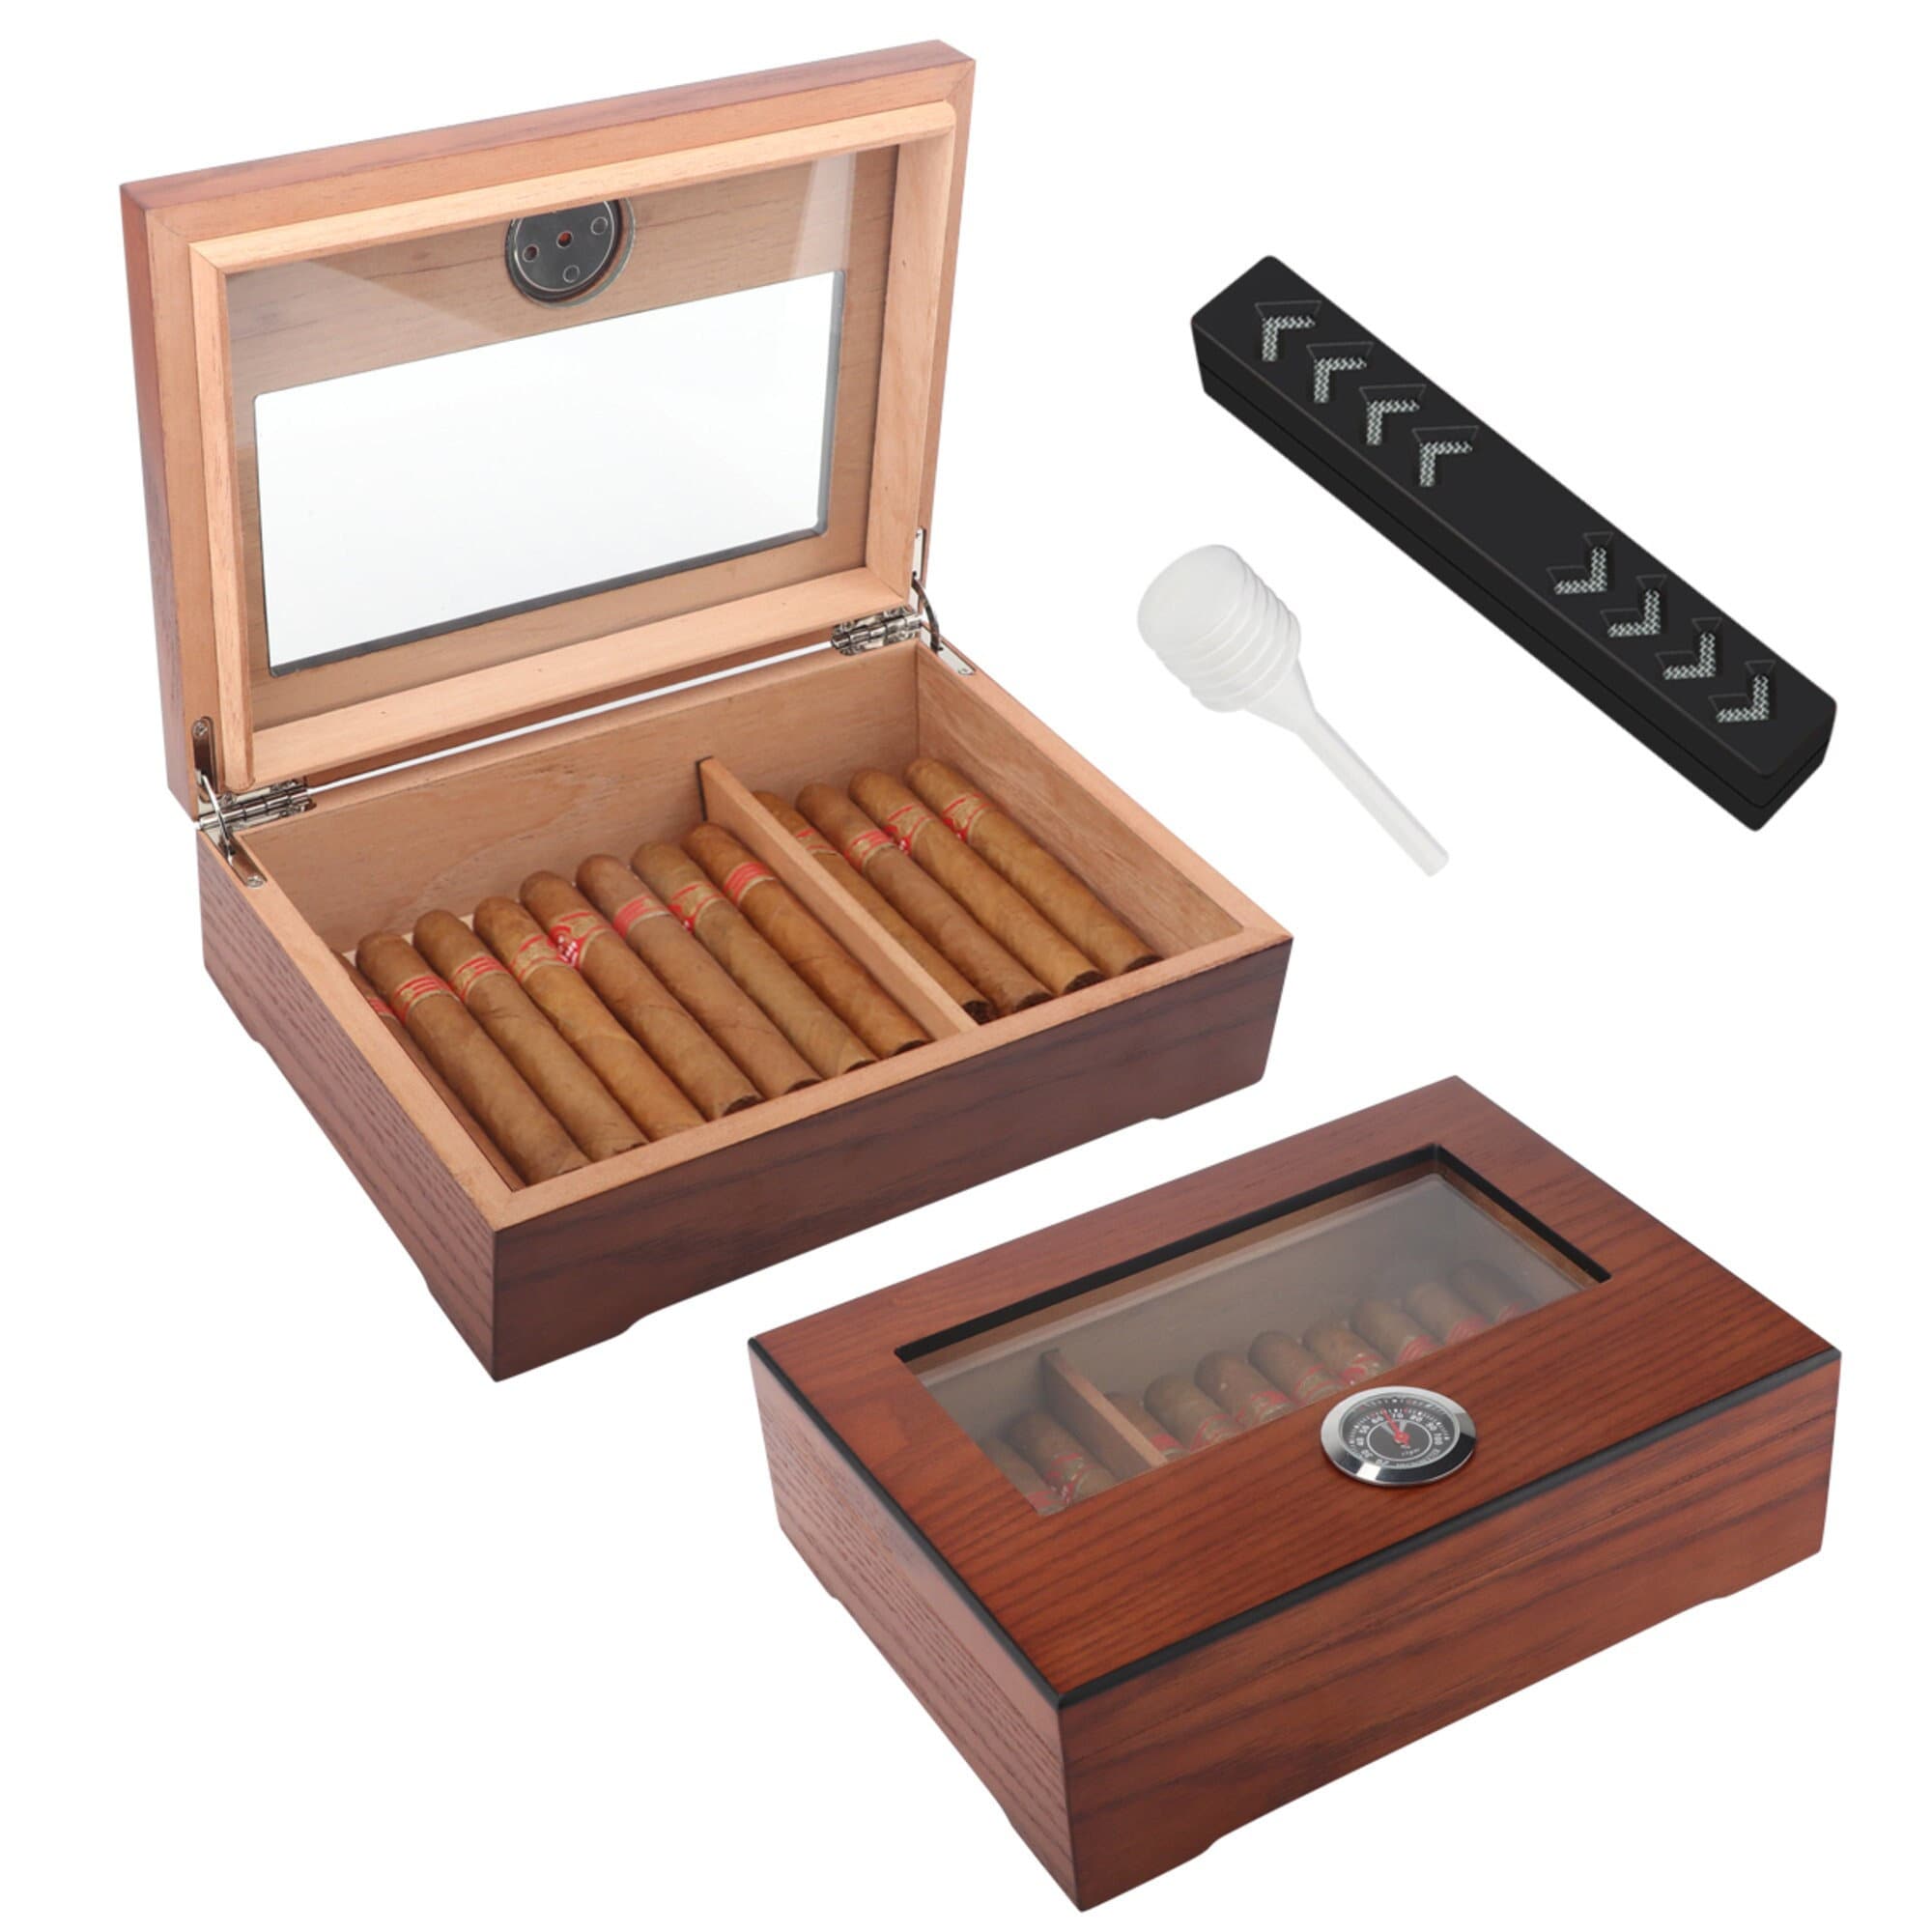 Olearn Mini Digital Temperature Humidity Meters Gauge Cigar Box